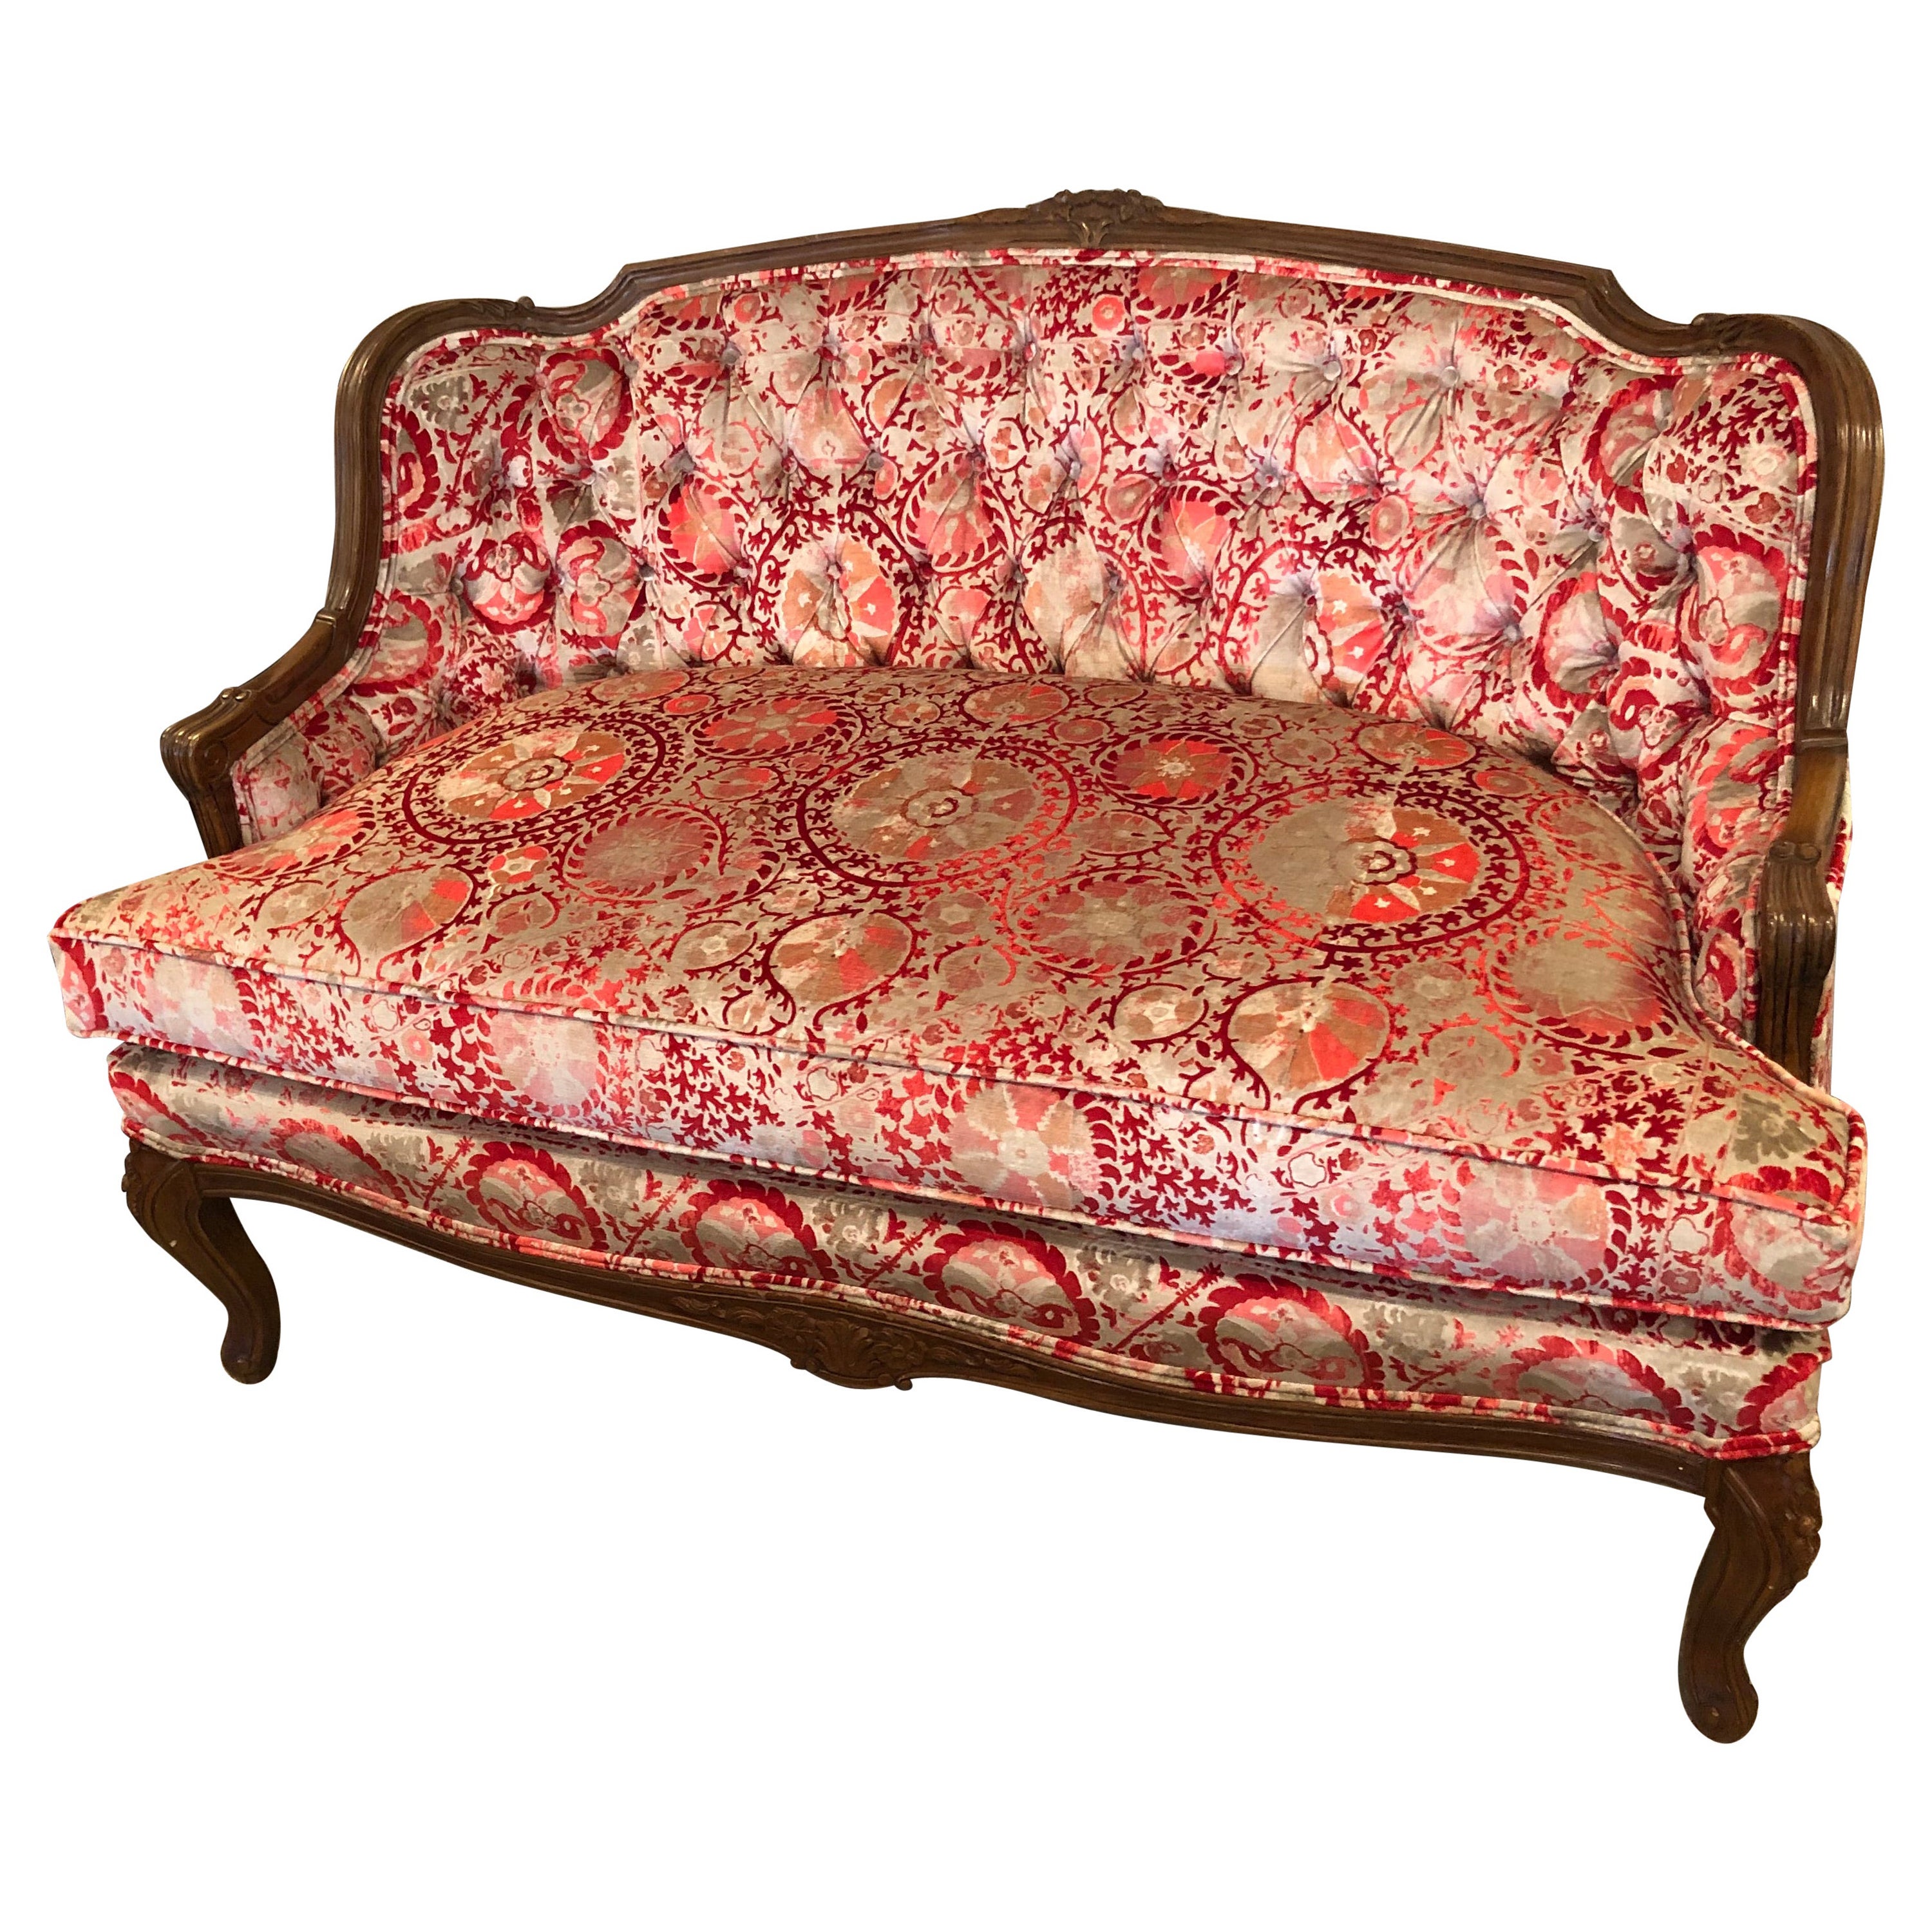 Antique Carved Walnut Tufted Small Settee Loveseat Upholstered in Velvet For Sale